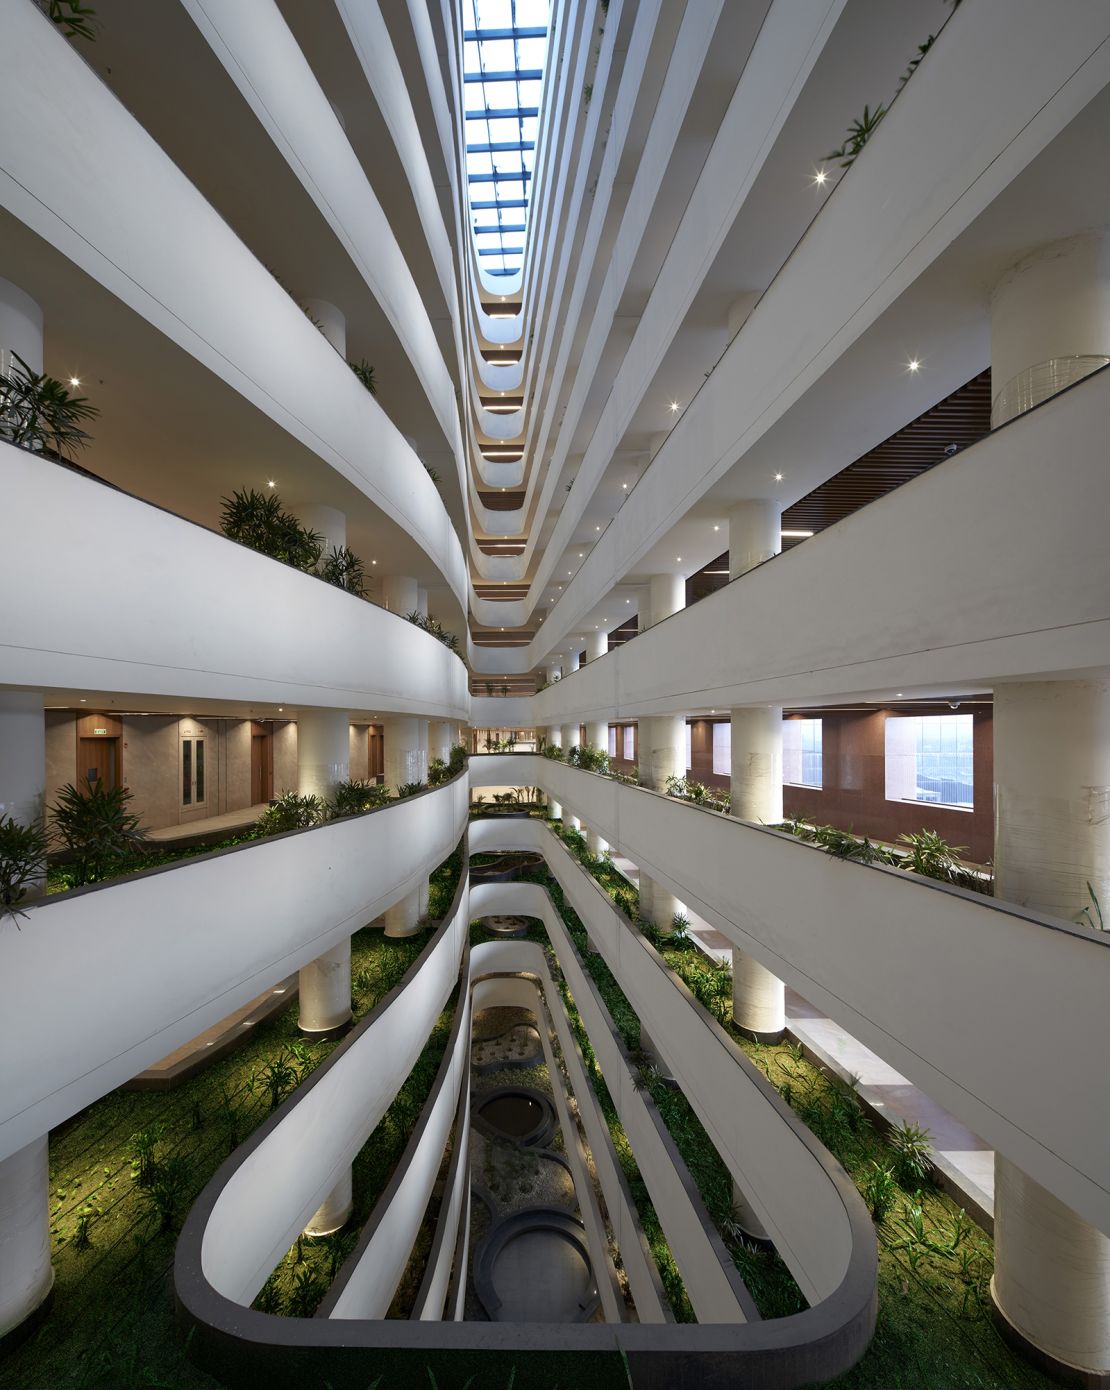 The building's atriums were designed to encourage natural ventilation through the building.